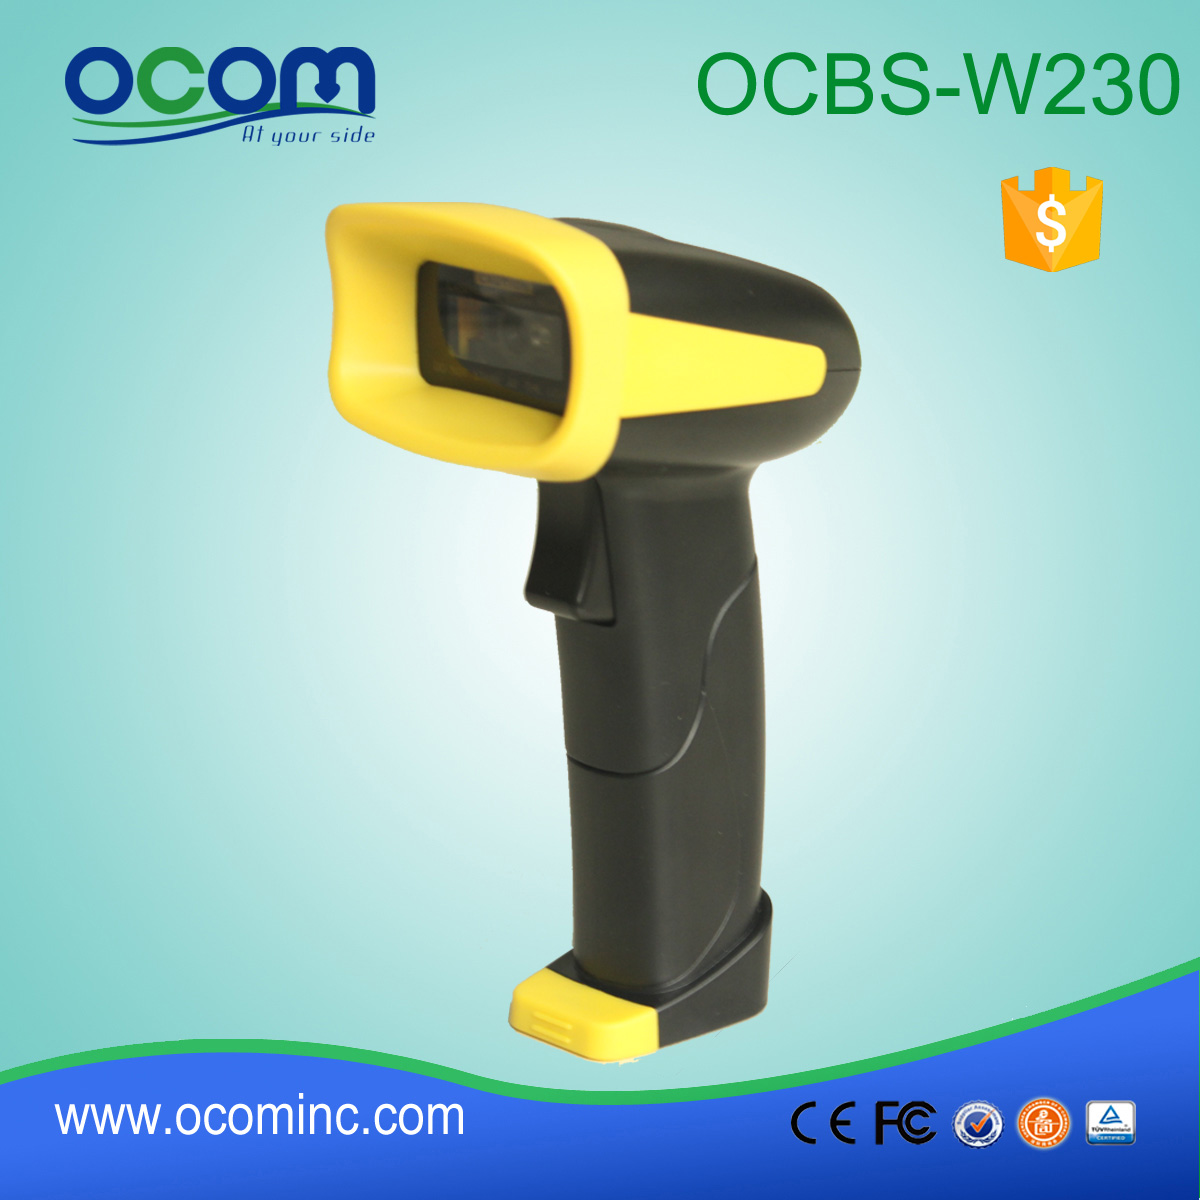 OCBS-W230 Κίνα Χειροκίνητο 1δ 2δ pdf417 Android Bluetooth σαρωτή γραμμωτού κώδικα